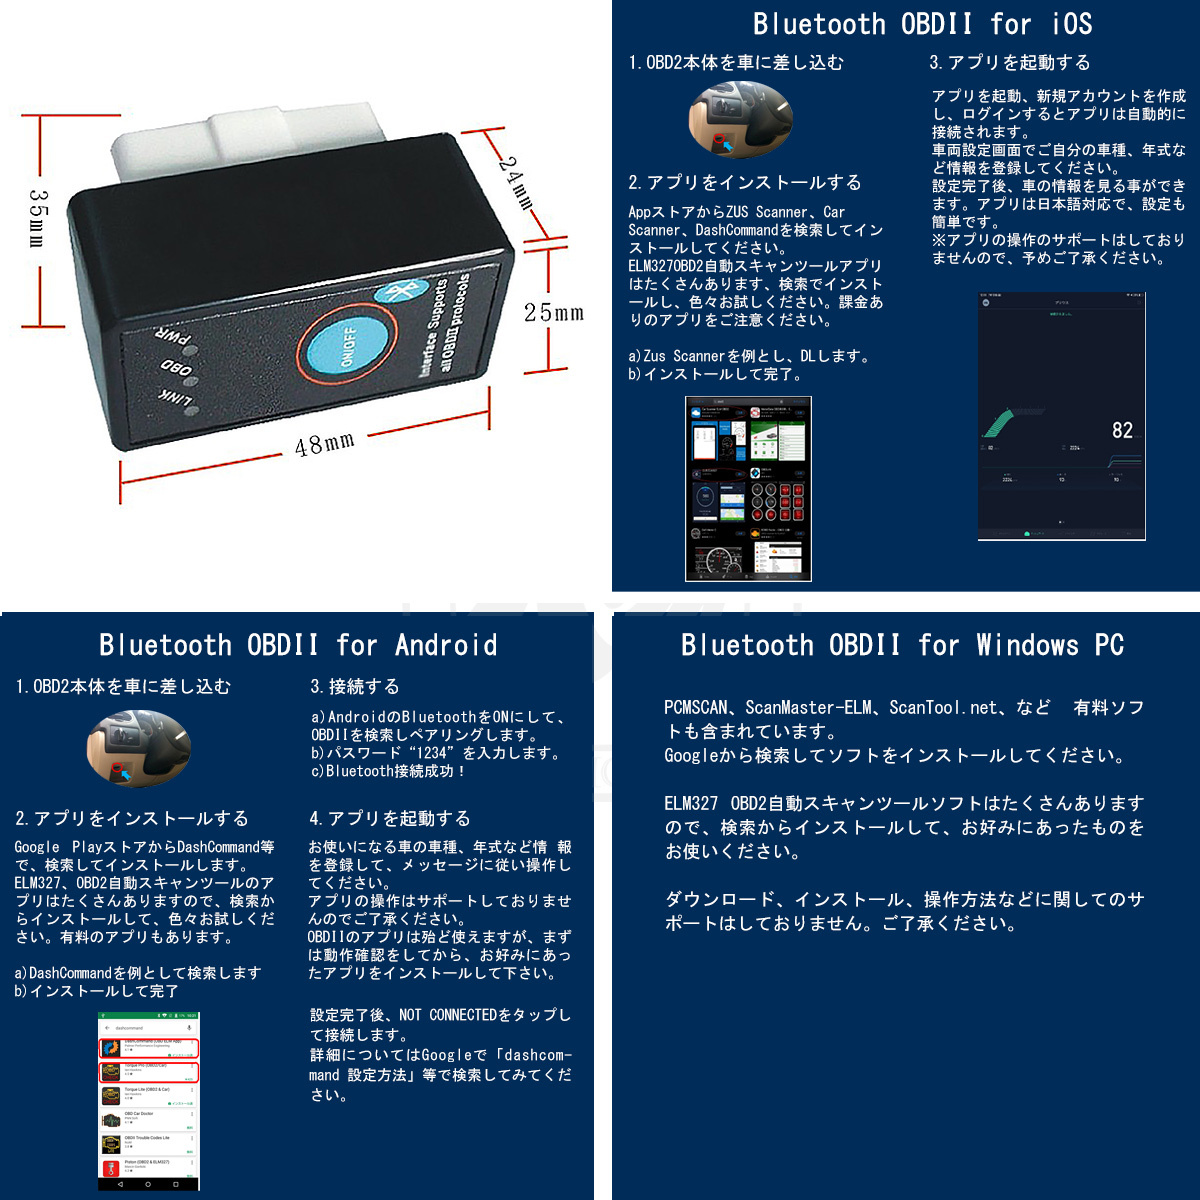 OBD2-ELM327-Bluetooth